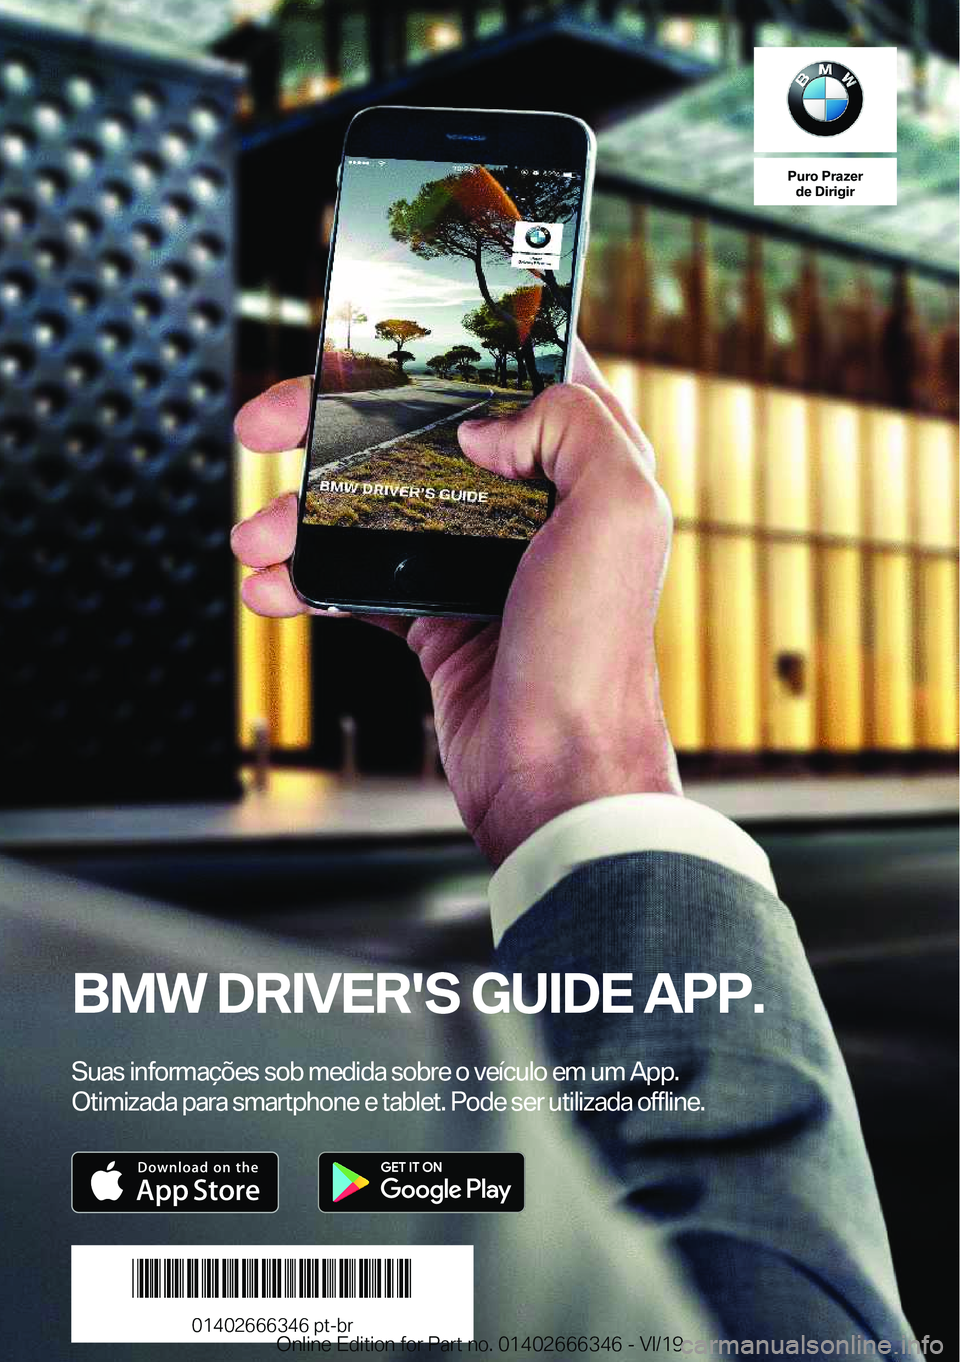 BMW 4 SERIES COUPE 2020  Manual do condutor (in Portuguese) �P�u�r�o��P�r�a�z�e�r�d�e��D�i�r�i�g�i�r
�B�M�W��D�R�I�V�E�R�'�S��G�U�I�D�E��A�P�P�.
�S�u�a�s��i�n�f�o�r�m�a�